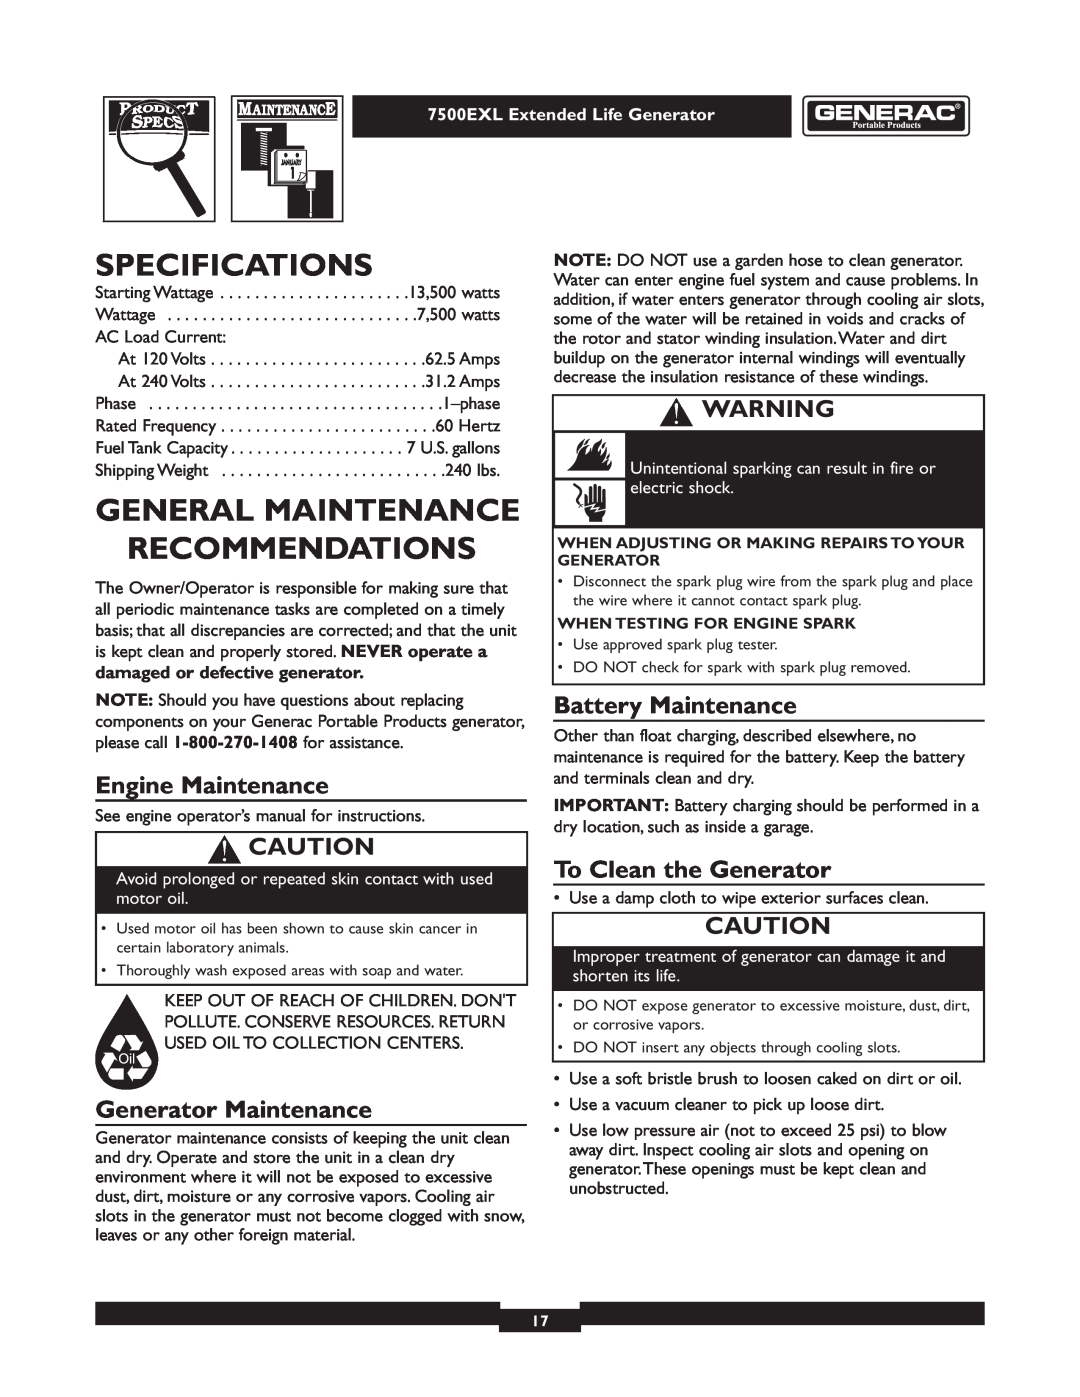 Generac 101 9-3 Specifications, General Maintenance Recommendations, Engine Maintenance, Generator Maintenance 